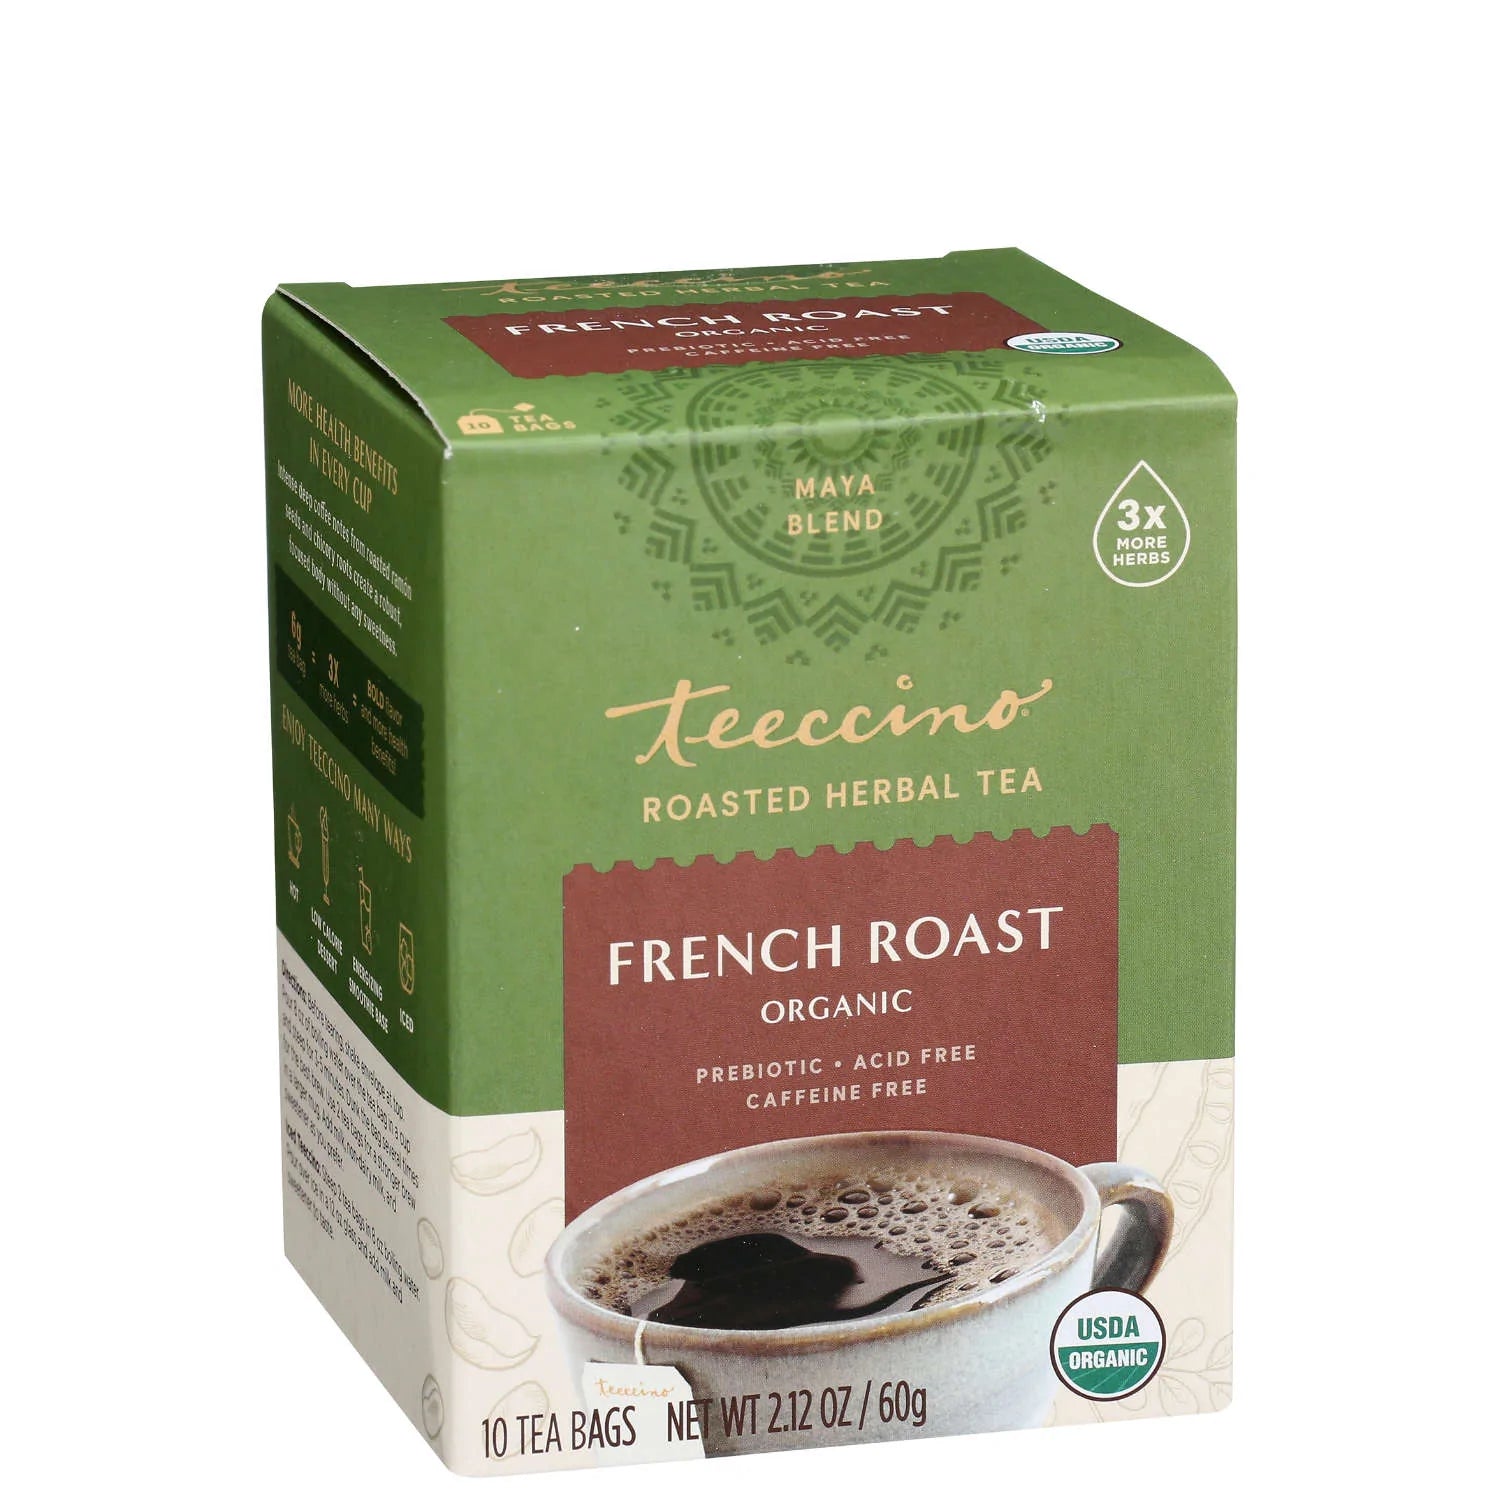 Teeccino French Roast Roasted Herbal Tea 10tbags